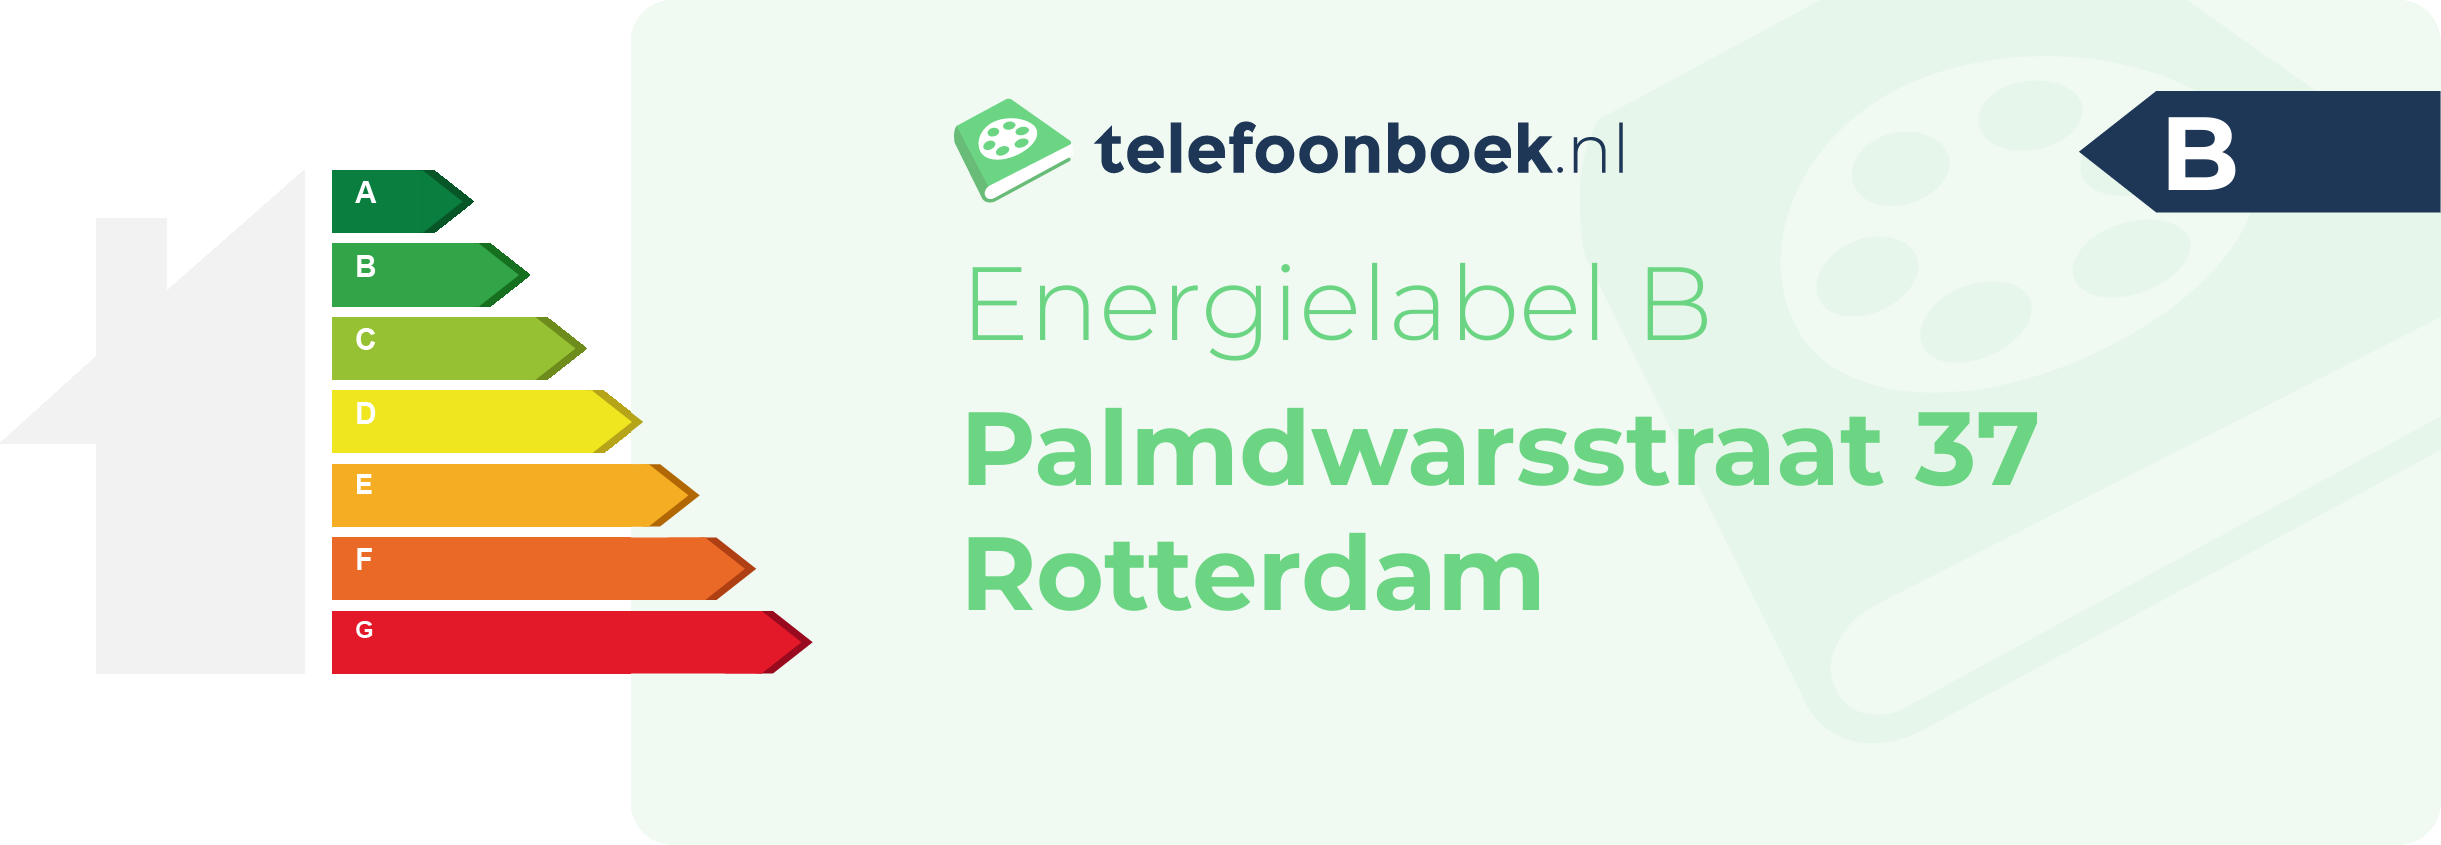 Energielabel Palmdwarsstraat 37 Rotterdam